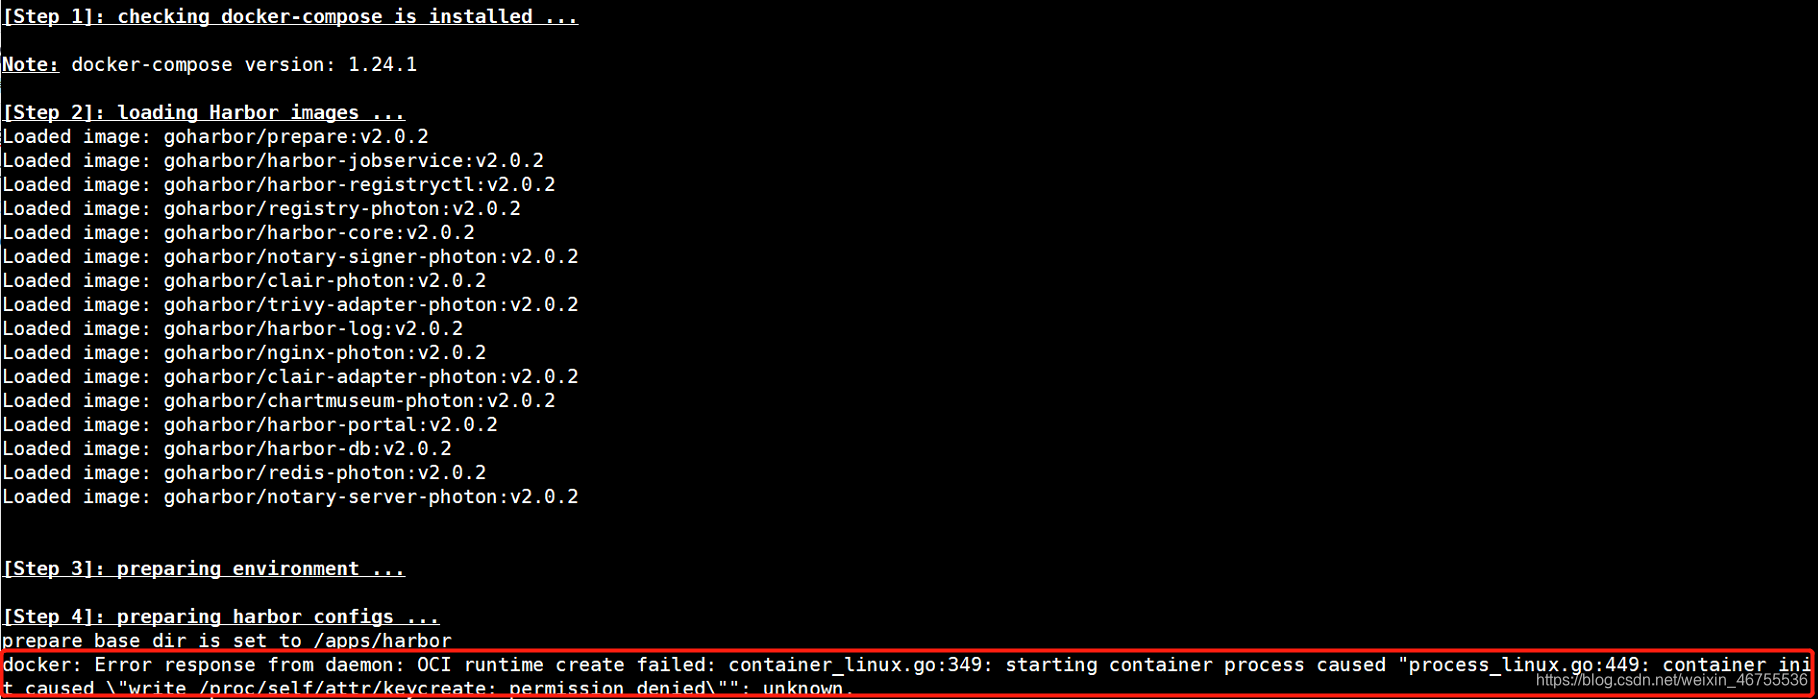 Response Error. Runtime Error 217 "НБД". Error response from Daemon: Bad response from docker engine..